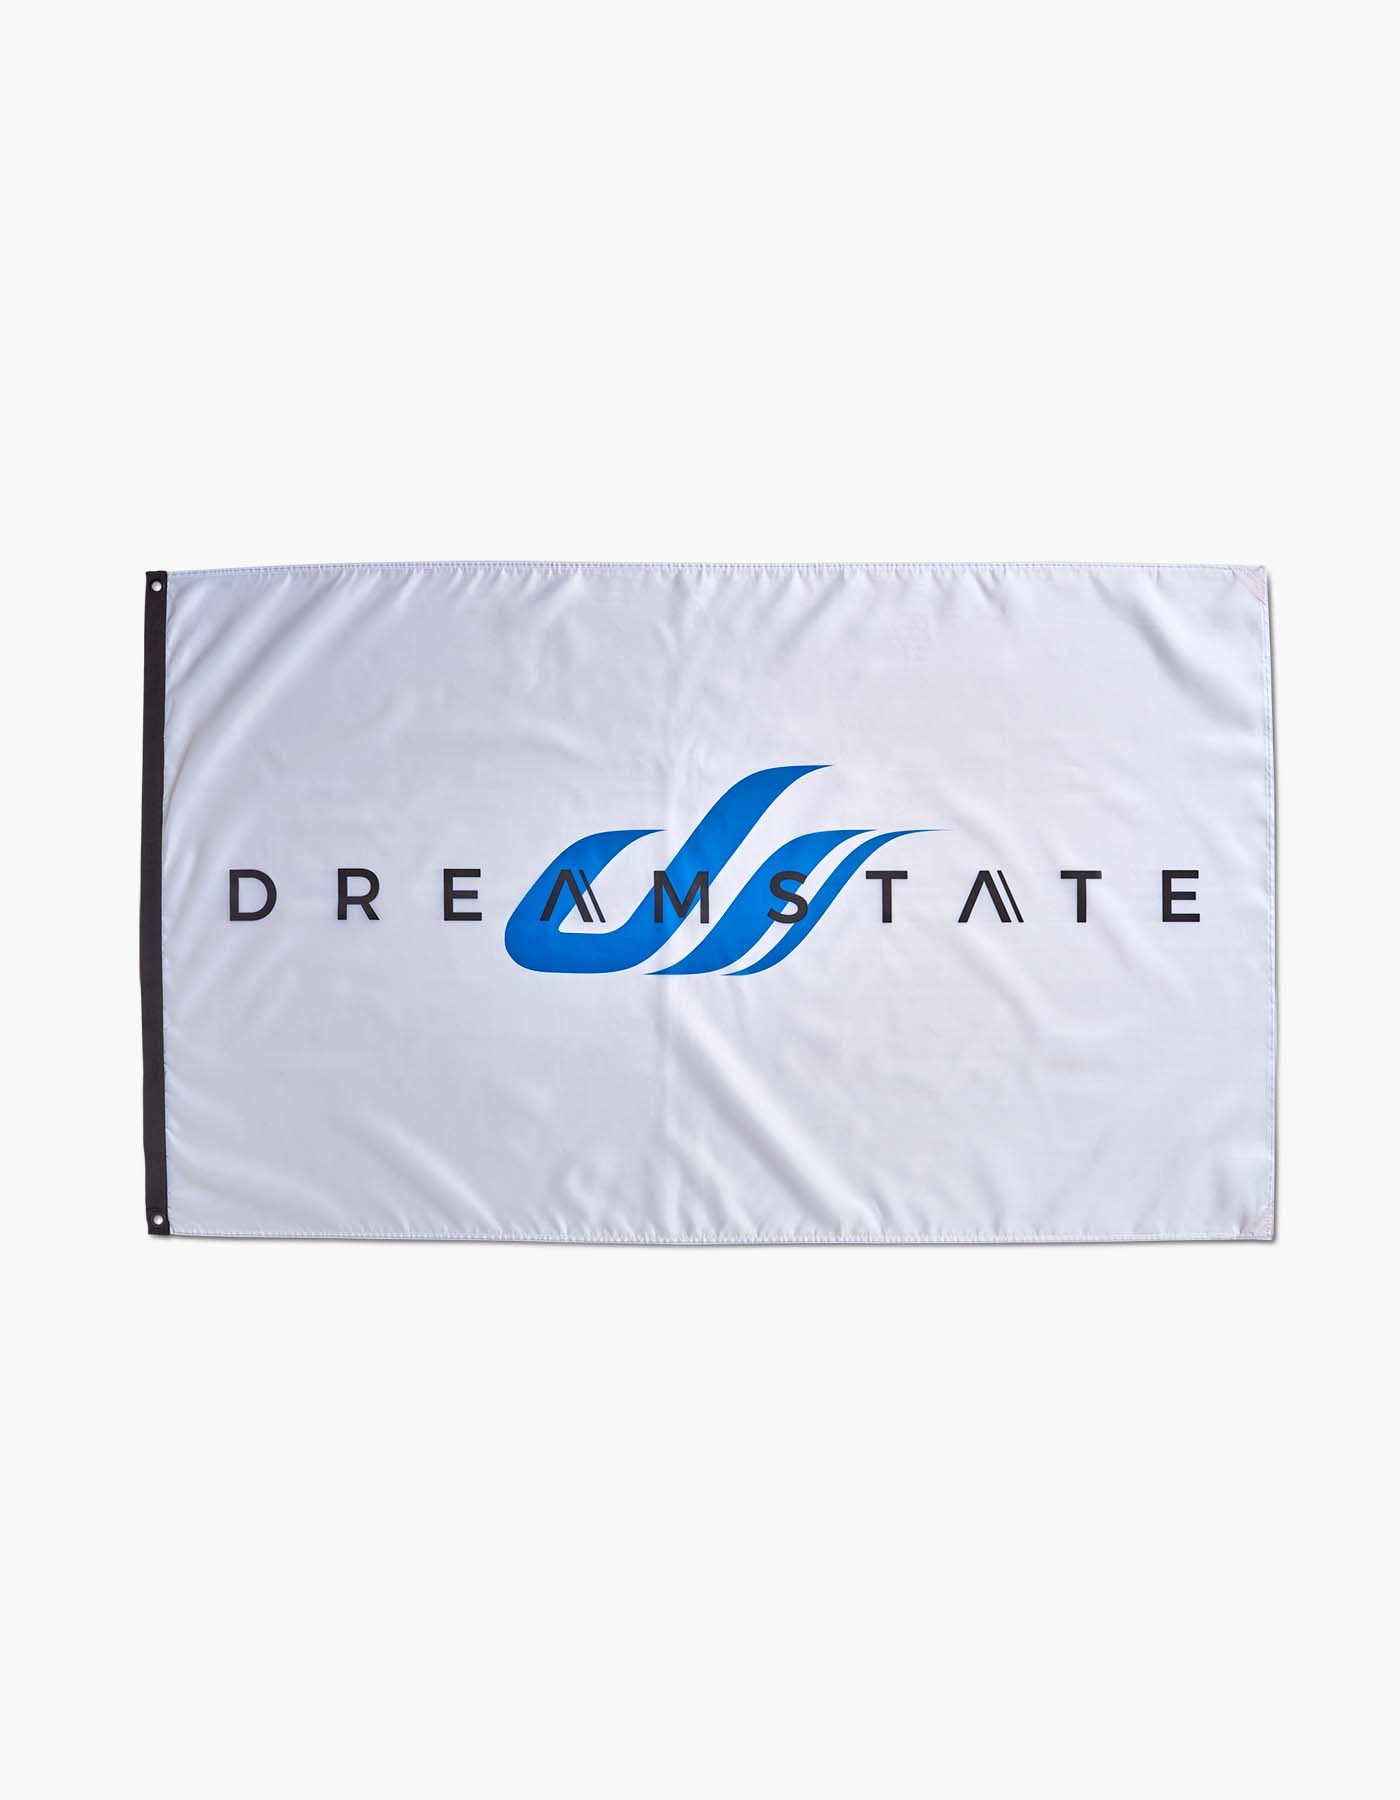 Dreamstate Flag